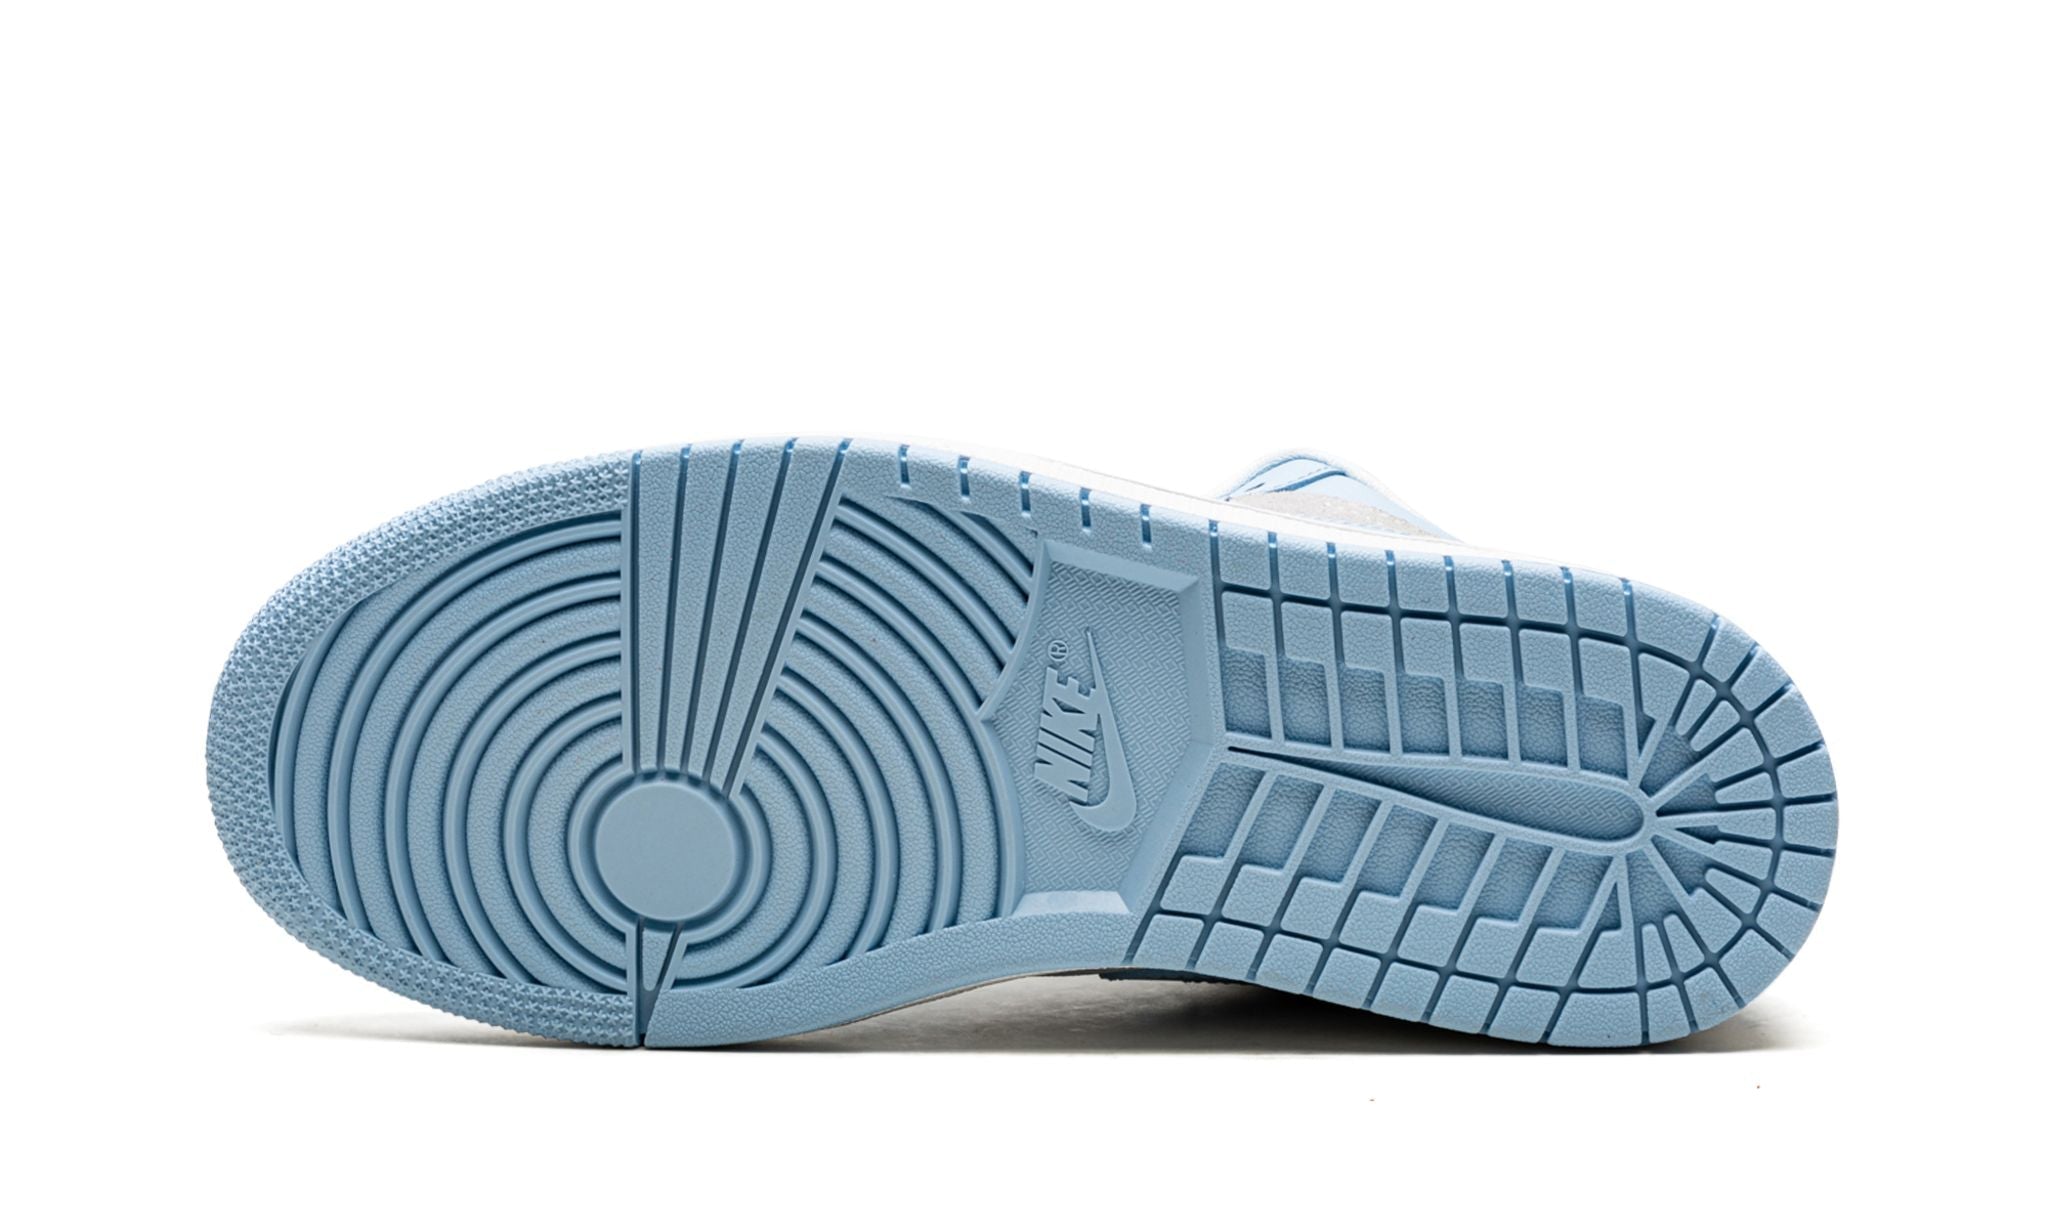 Jordan 1 Low "Football Grey Aluminum" - DC0774-050 - Sneakers